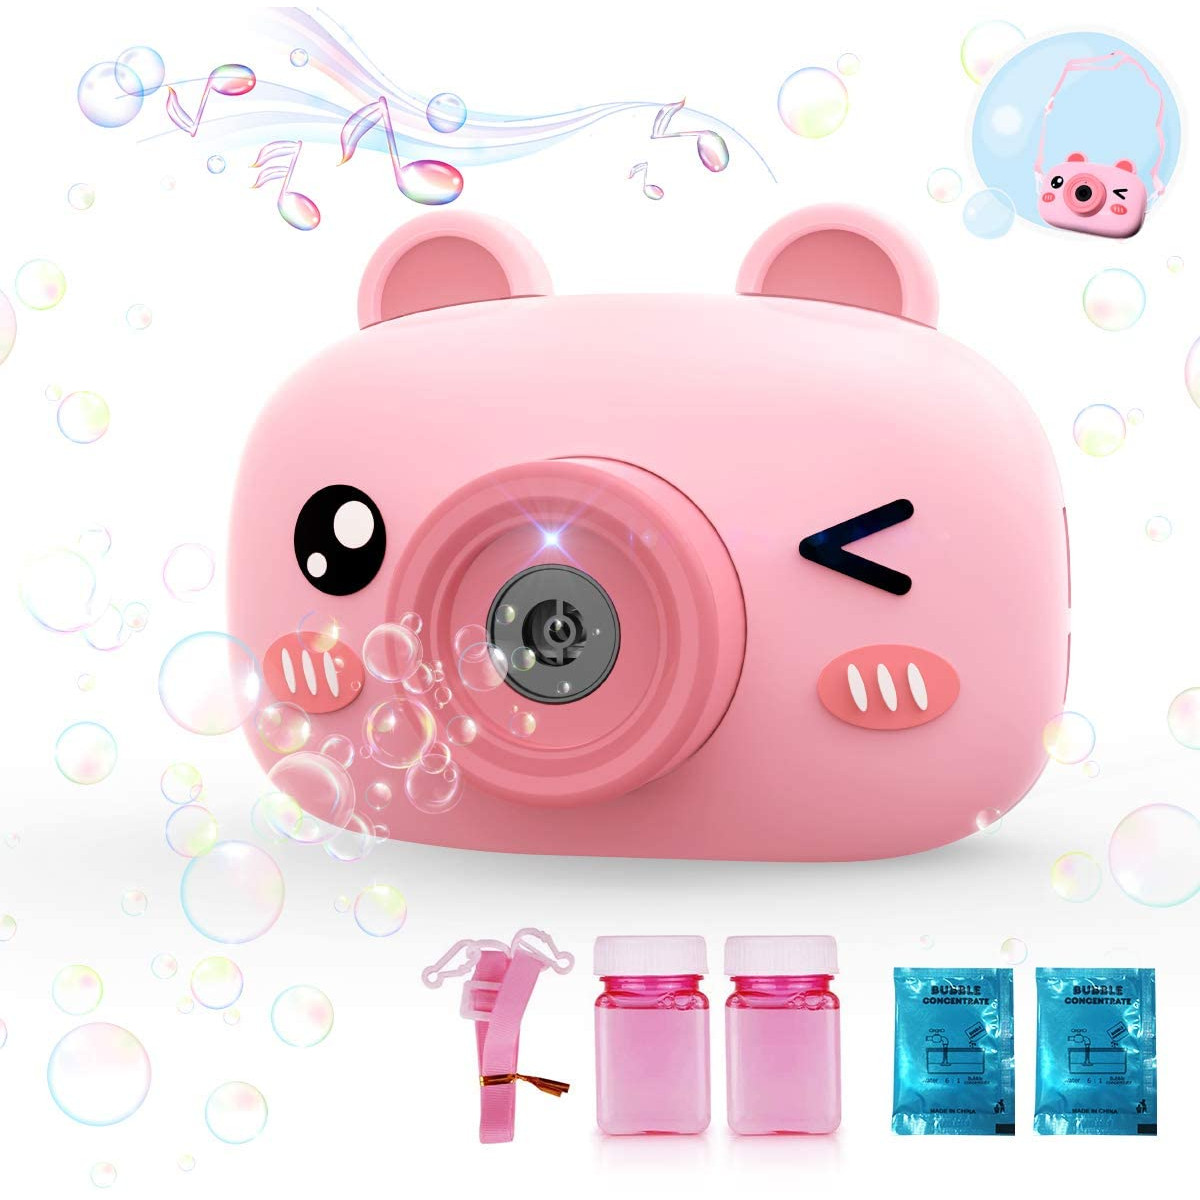 Pickwoo-Bubble-Machine-Automatic-Music-Camera-Style-Bubble-Blower-Maker-Portable-Bubbles-Making-for--1888498-8